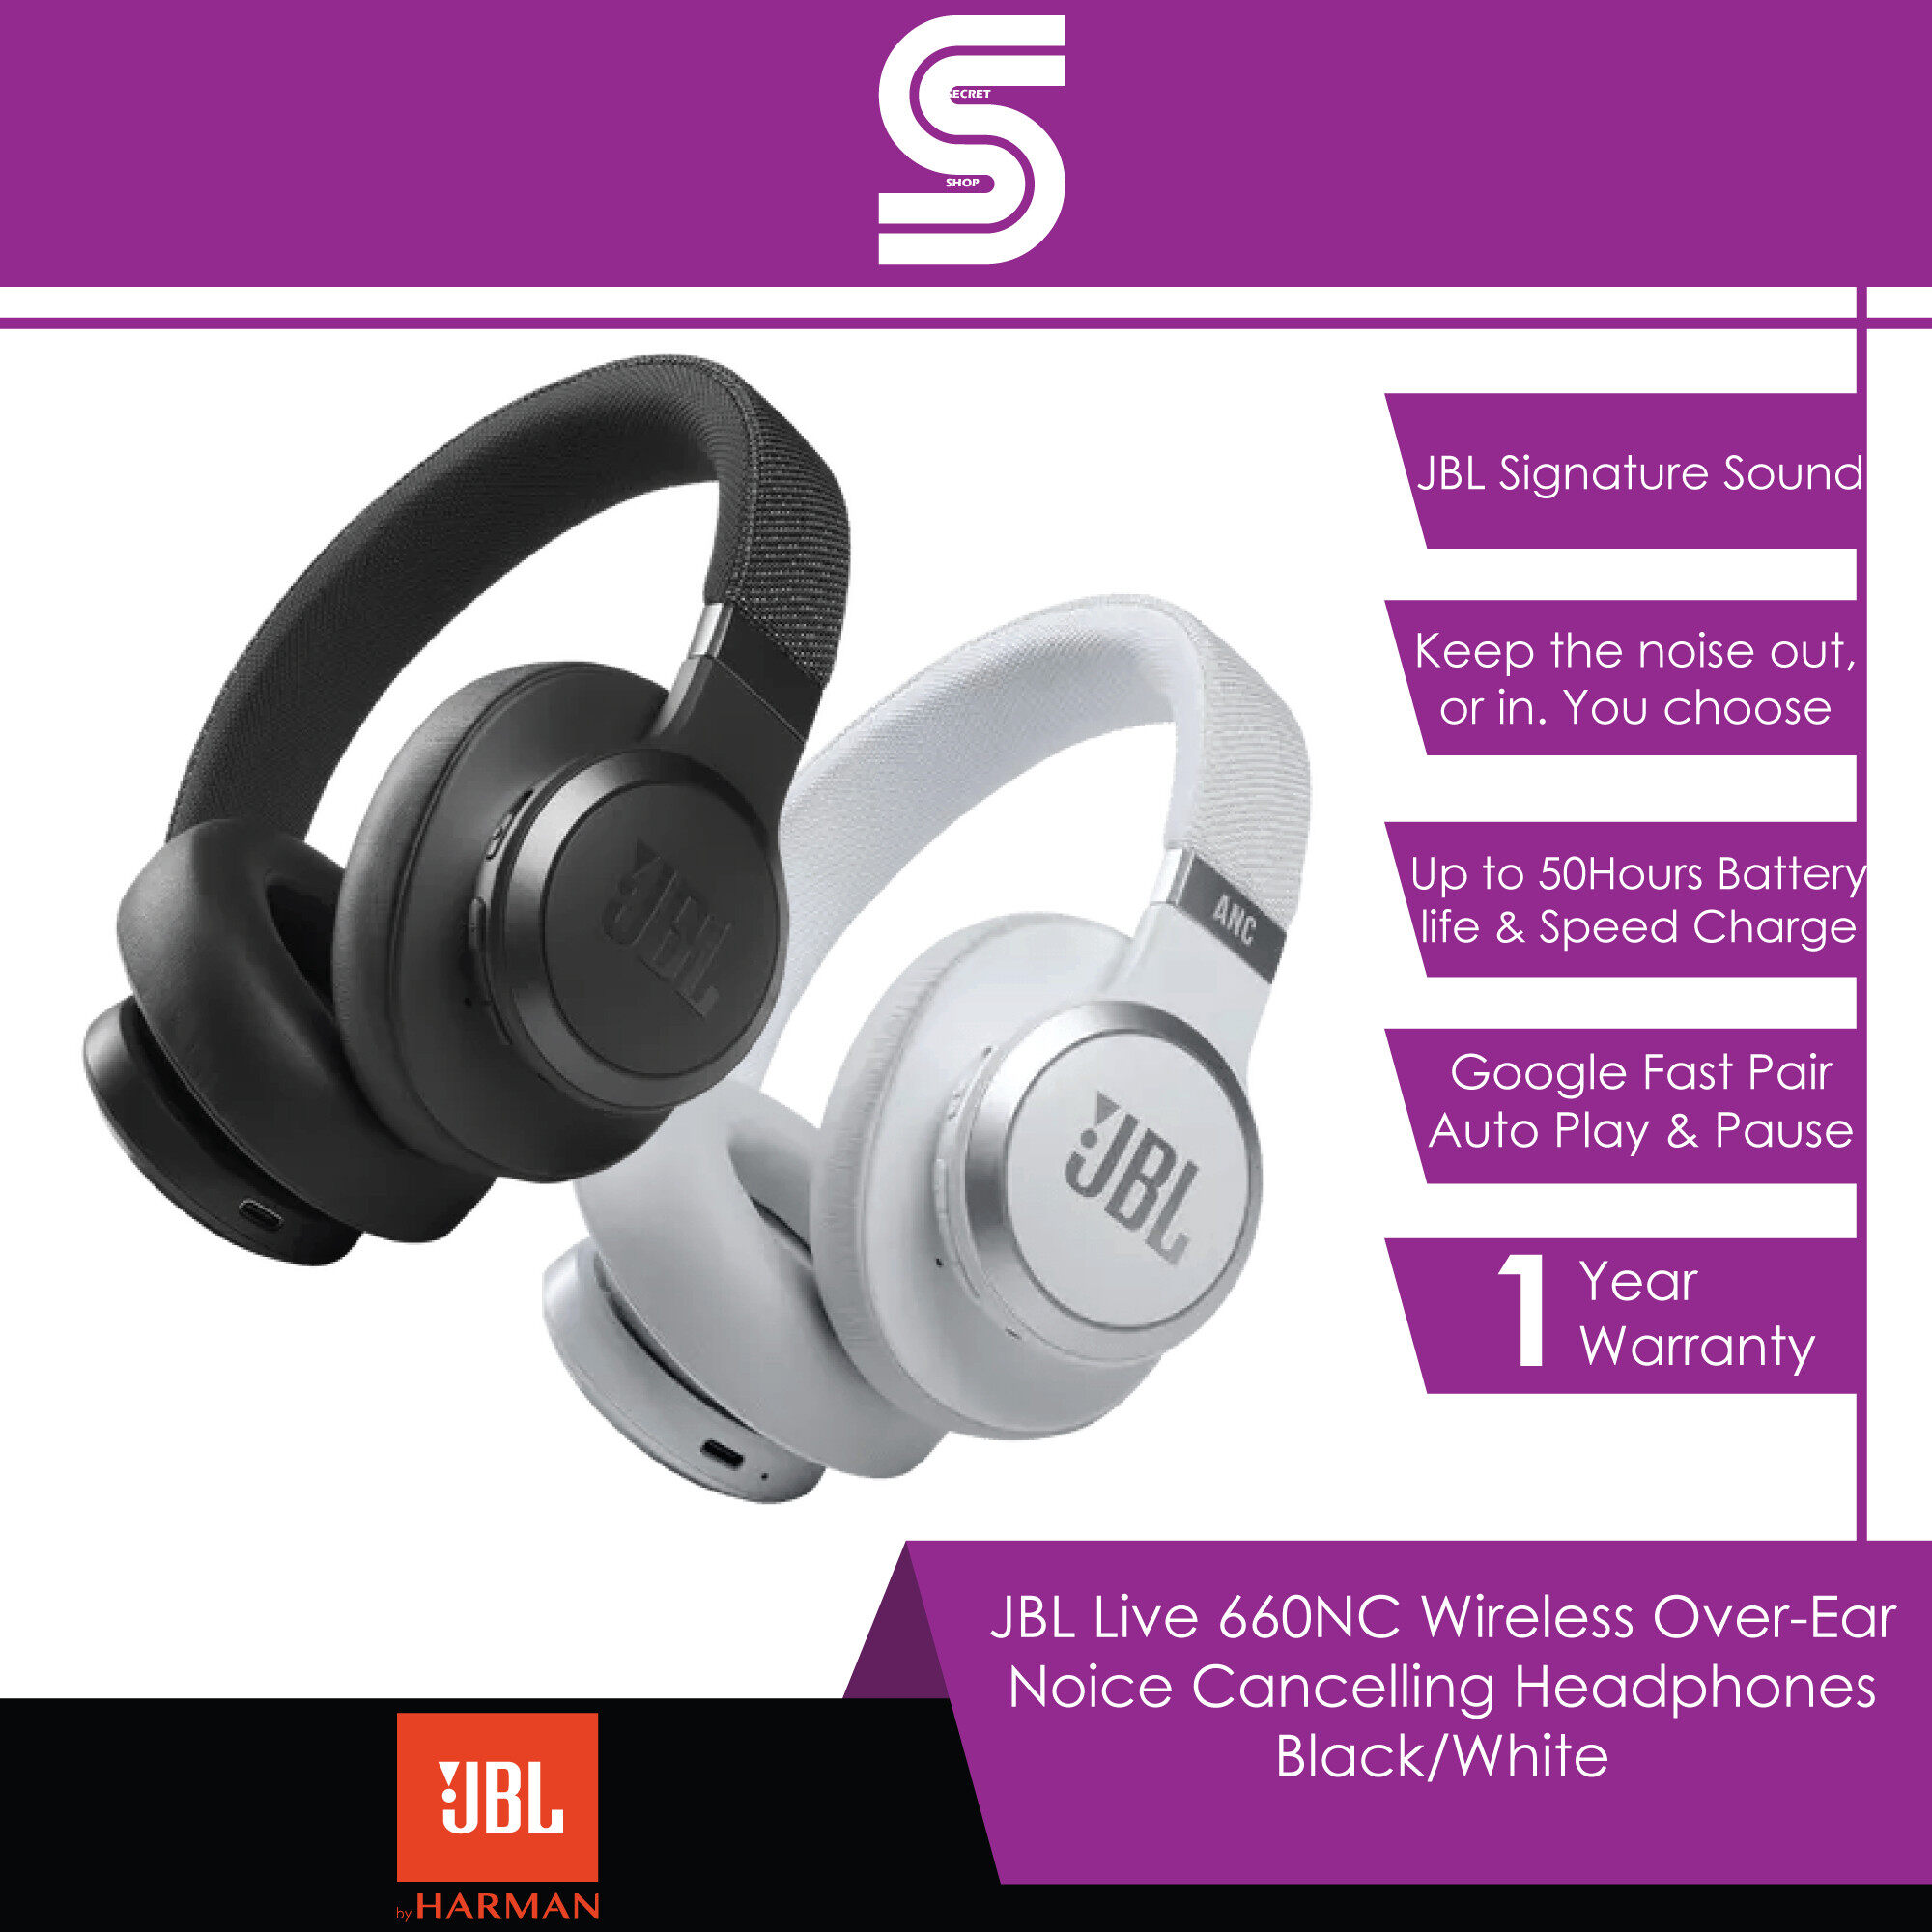 JBL Live 660NC Wireless Over-Ear NC Headphones - Black/White